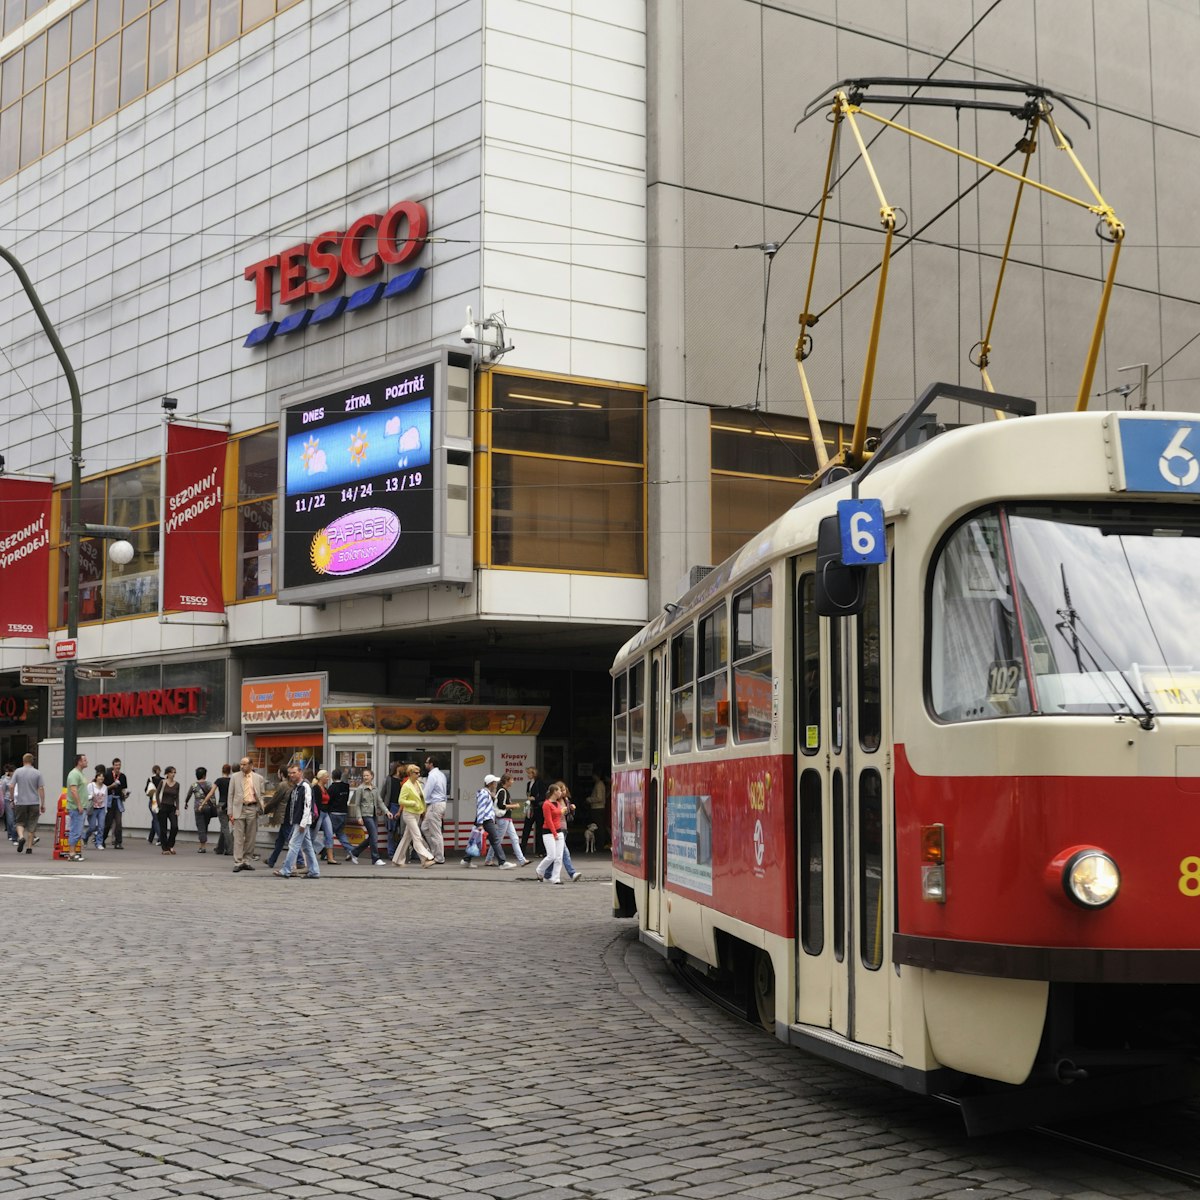 Tram passing Tesco department store on Narodni trida (National Avenue), Nove Mesto.